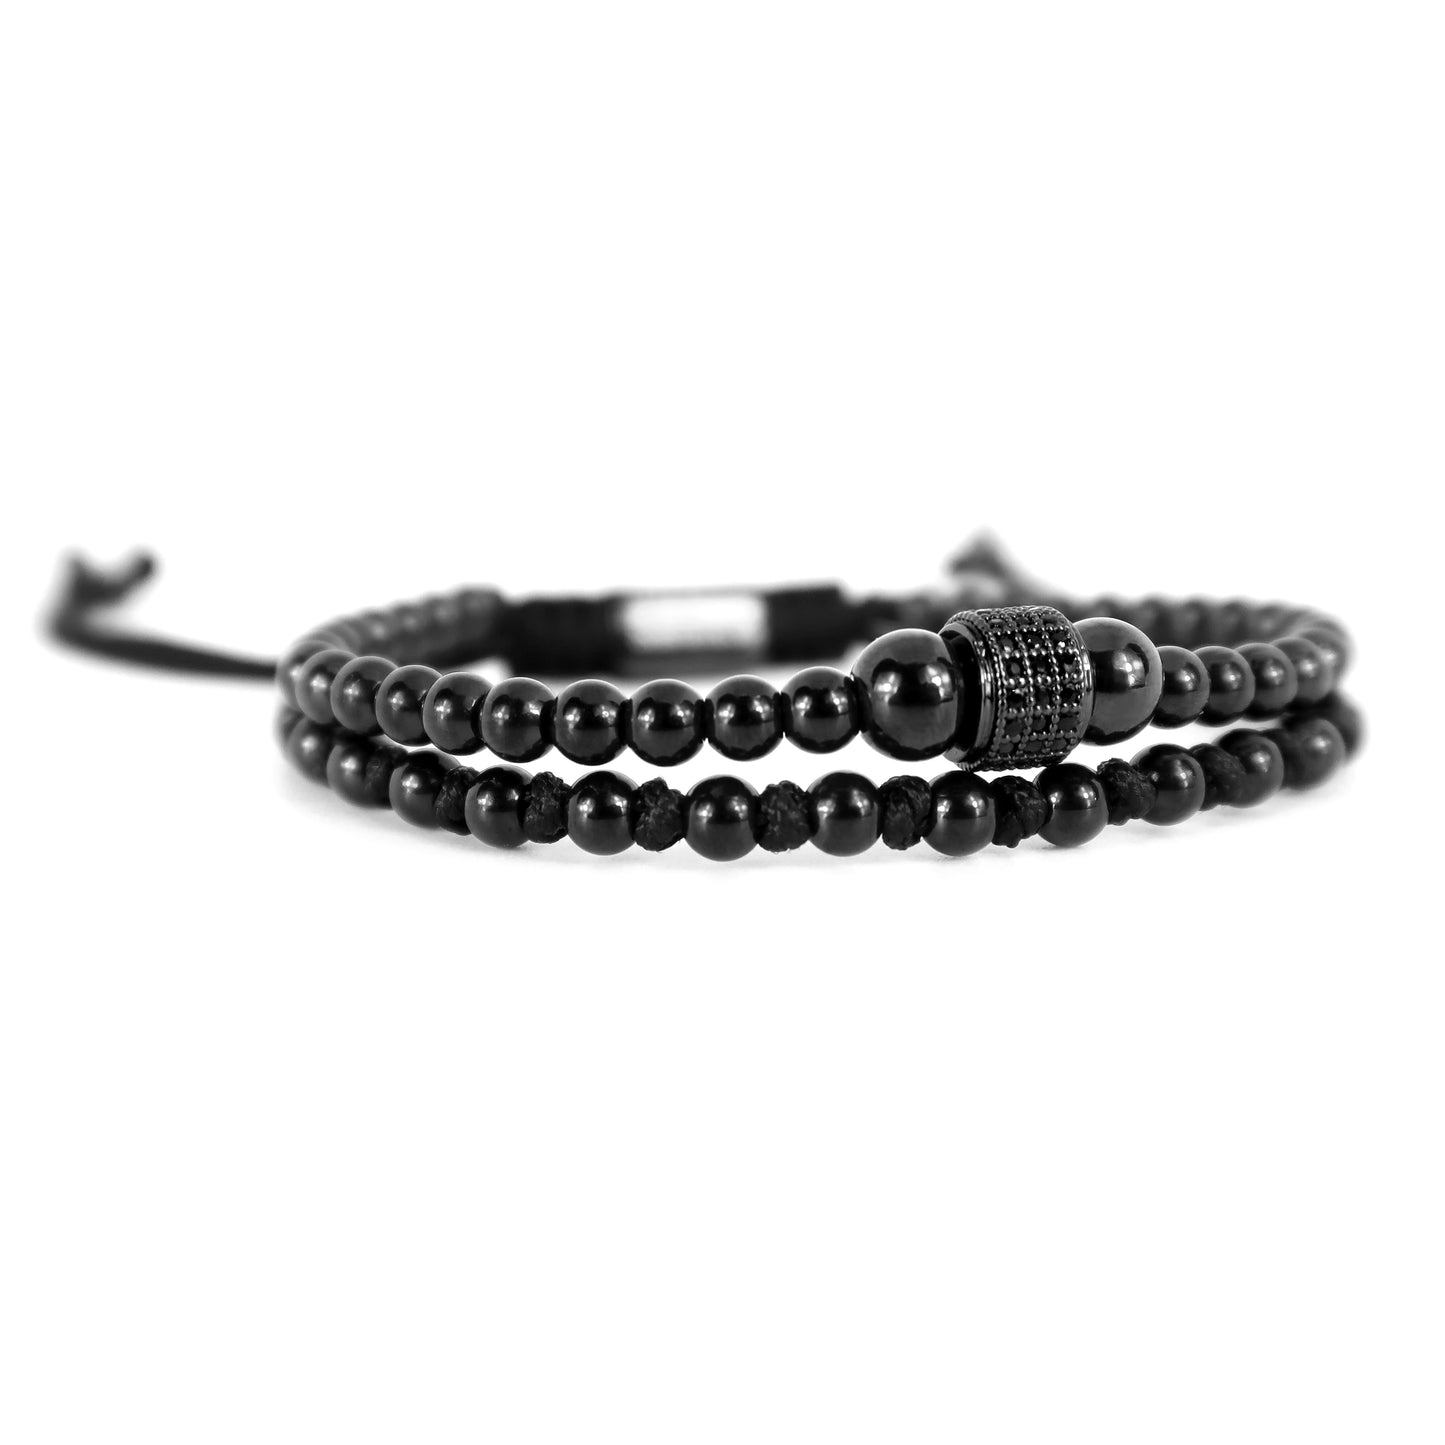 Sasha & Jo black beads & pavé rhinestones bracelet